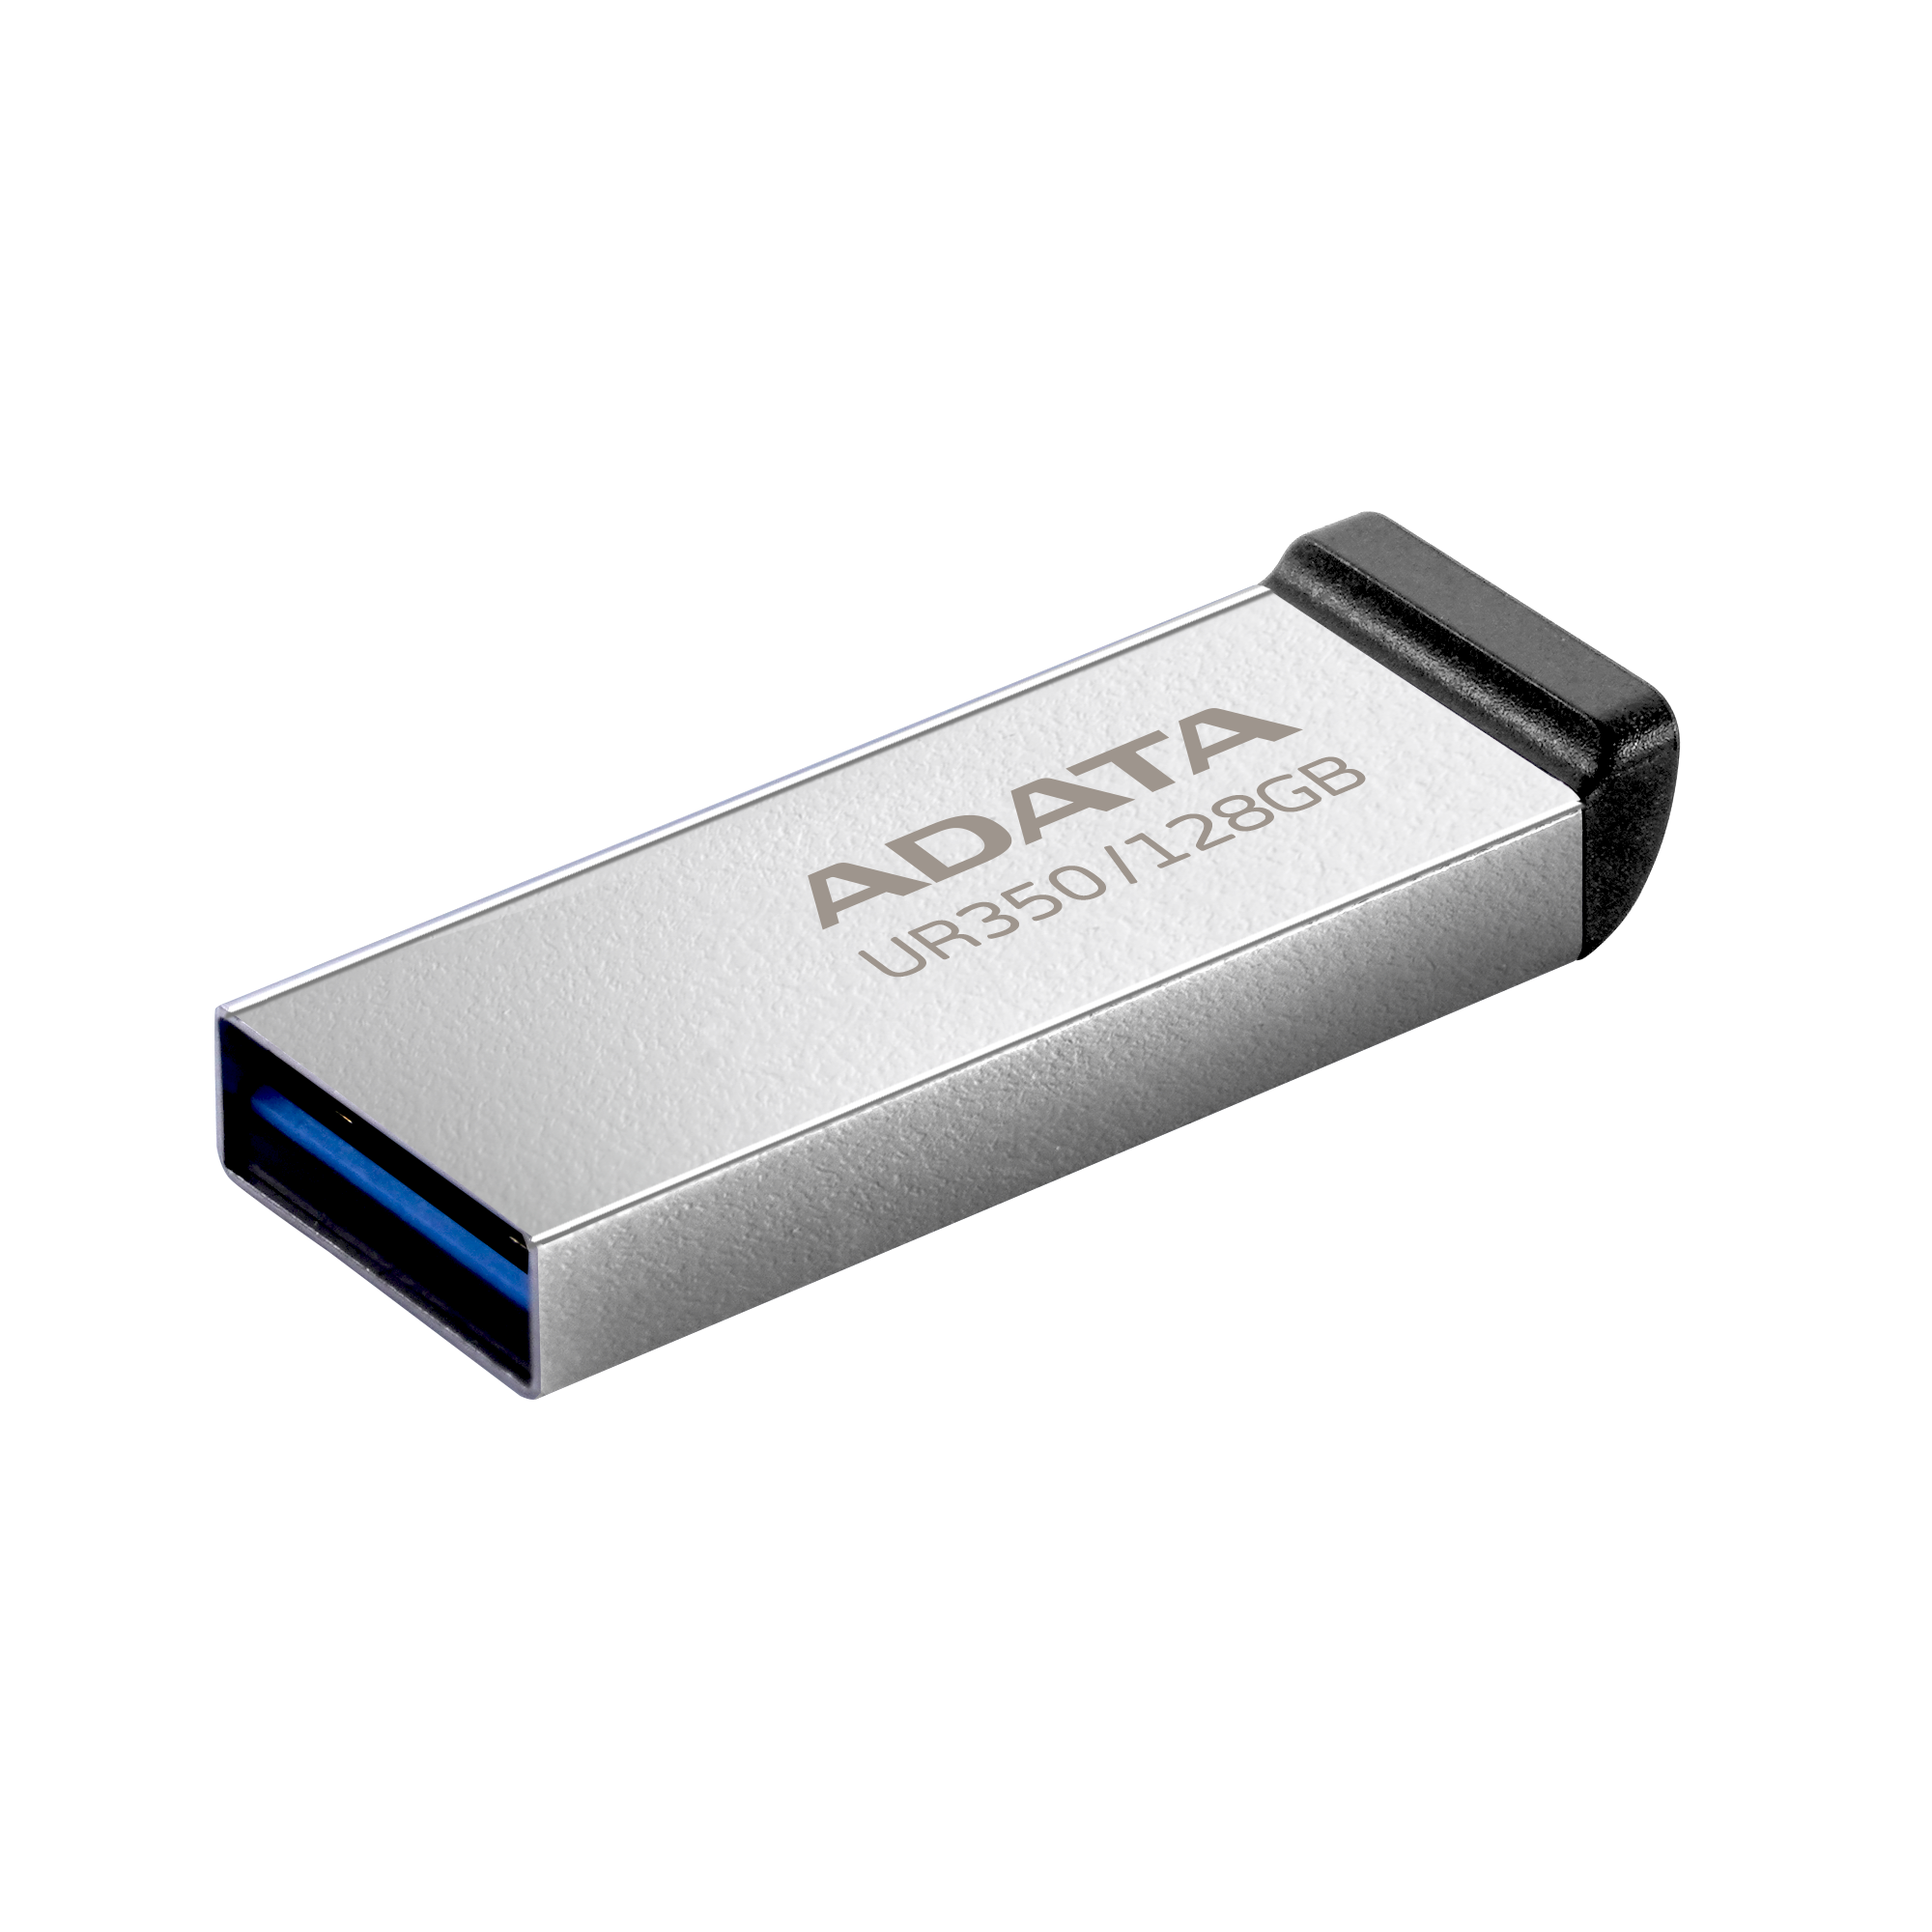 ADATA UR350/ 128GB/ USB 3.2/ USB-A/ Černá 